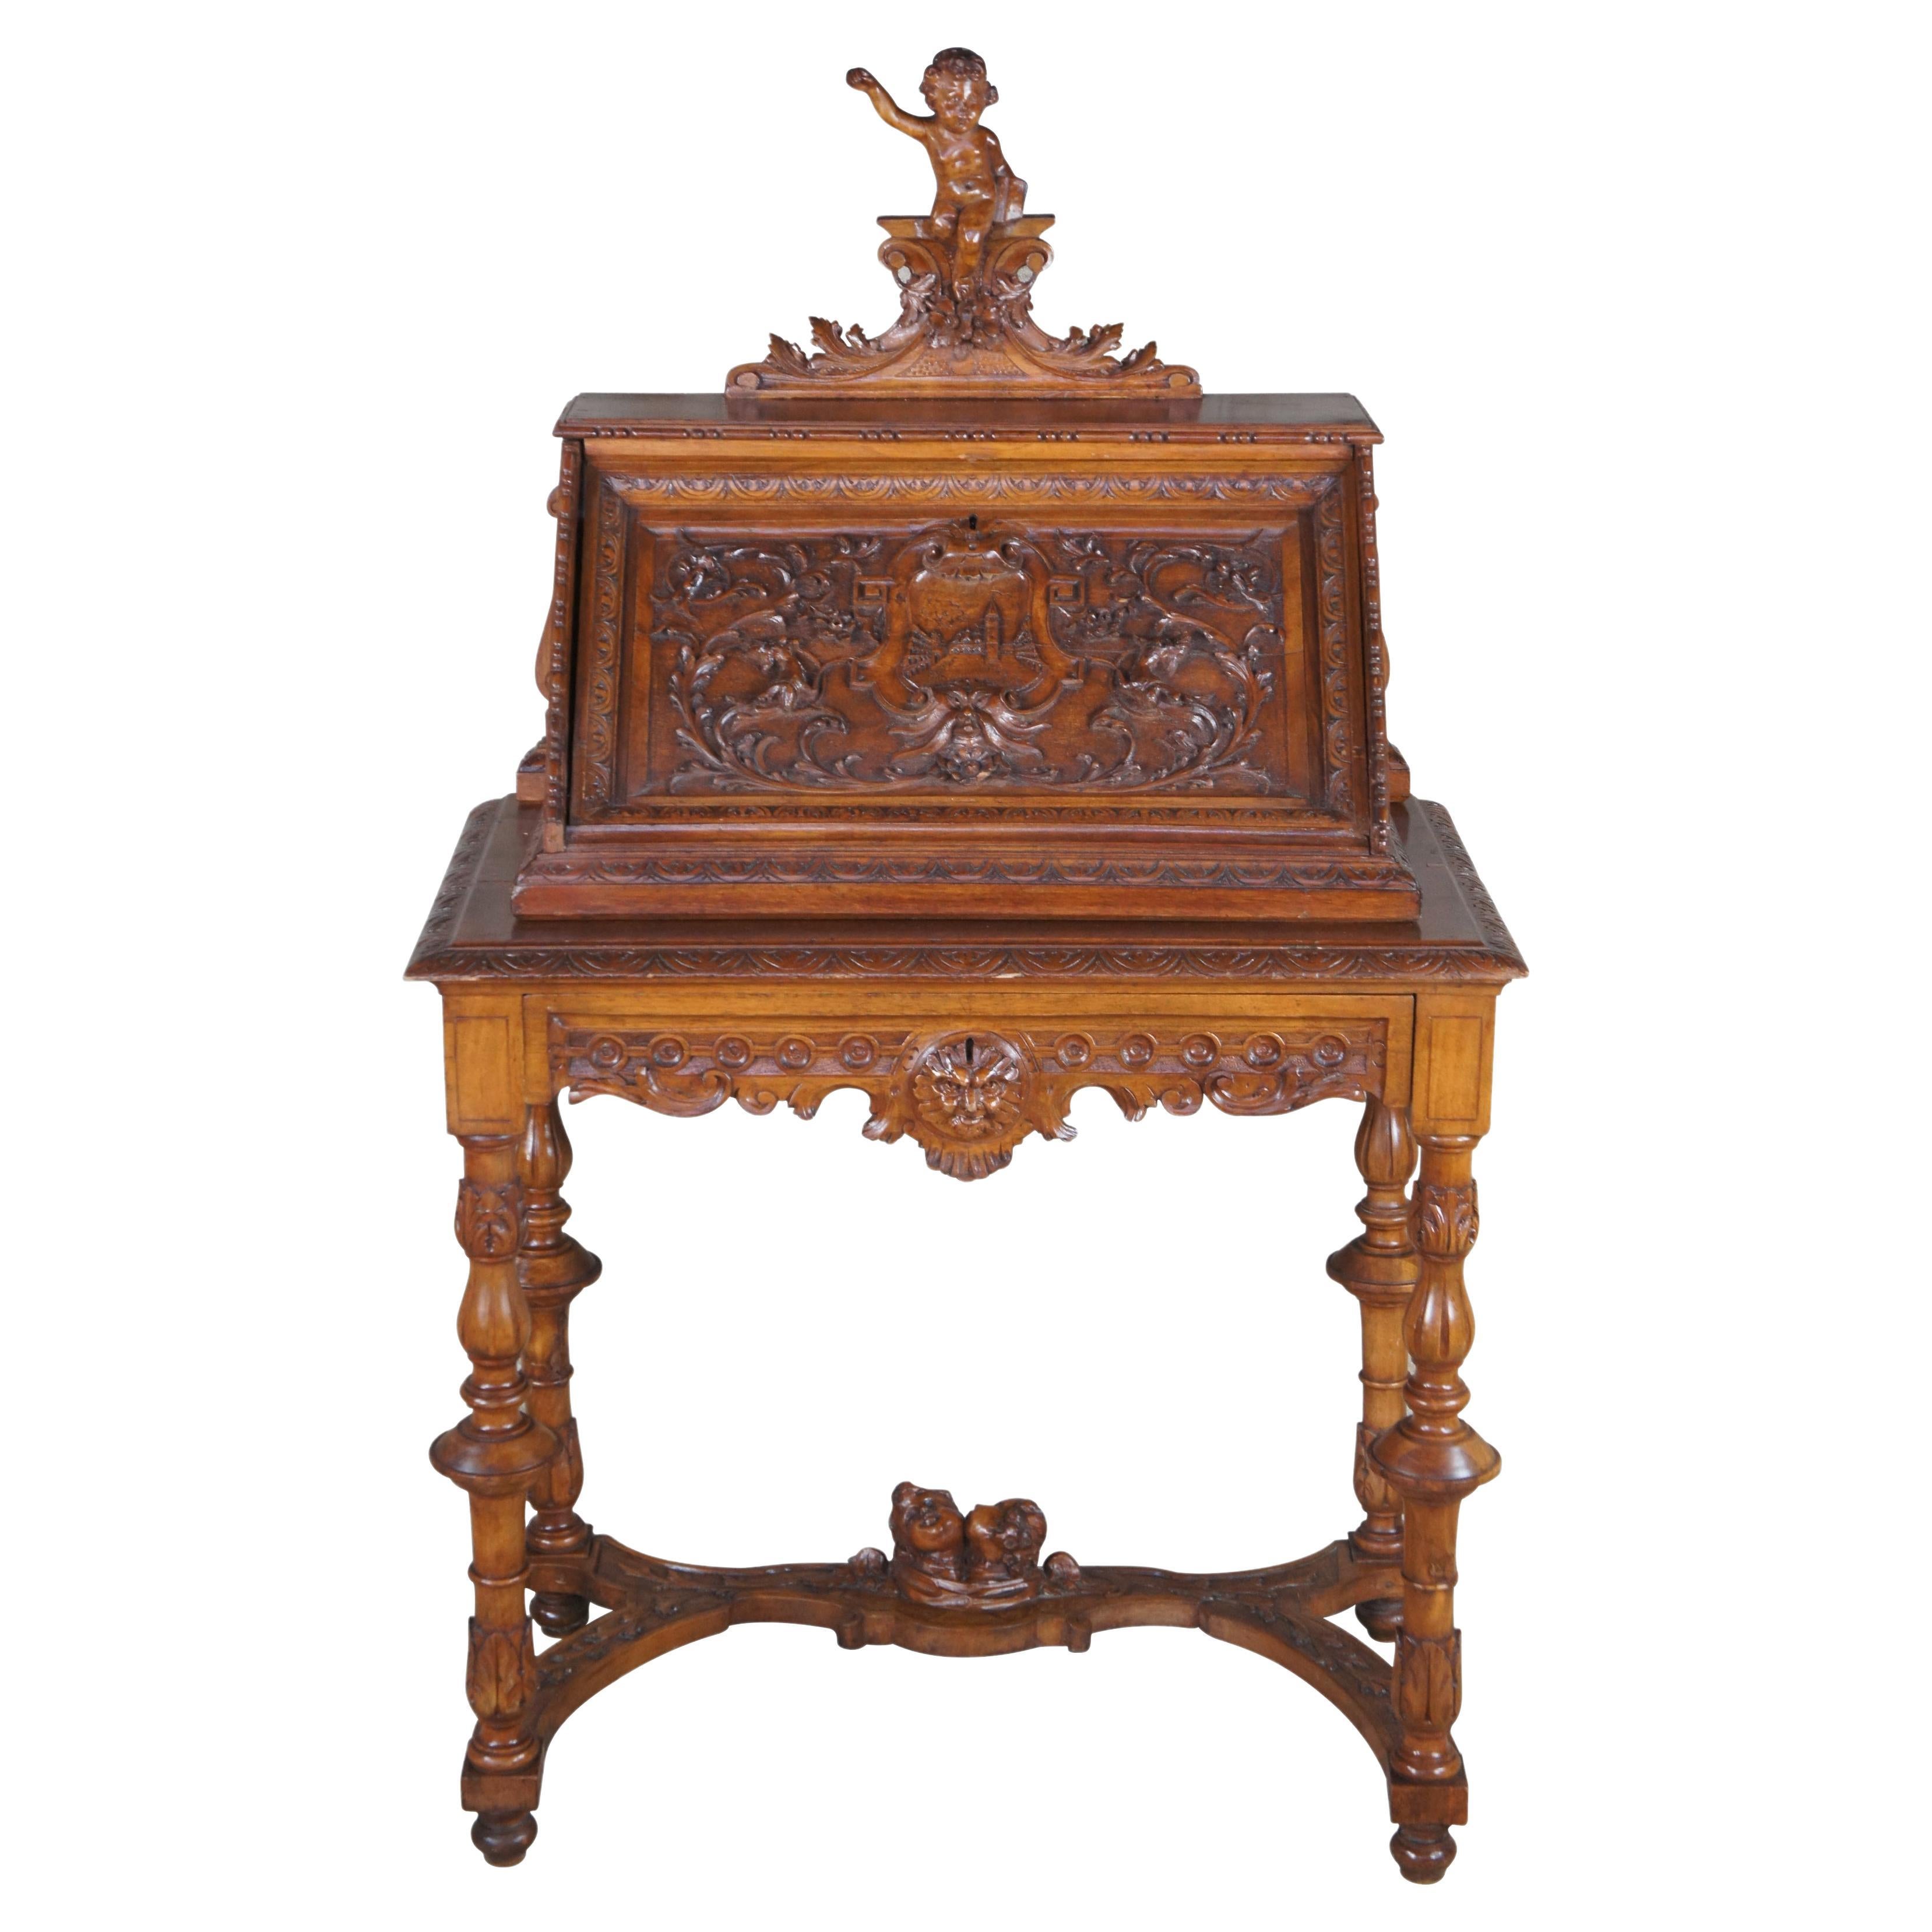 Antique Italian Renaissance Revival Walnut Figural Carved Writing Desk 52" For Sale